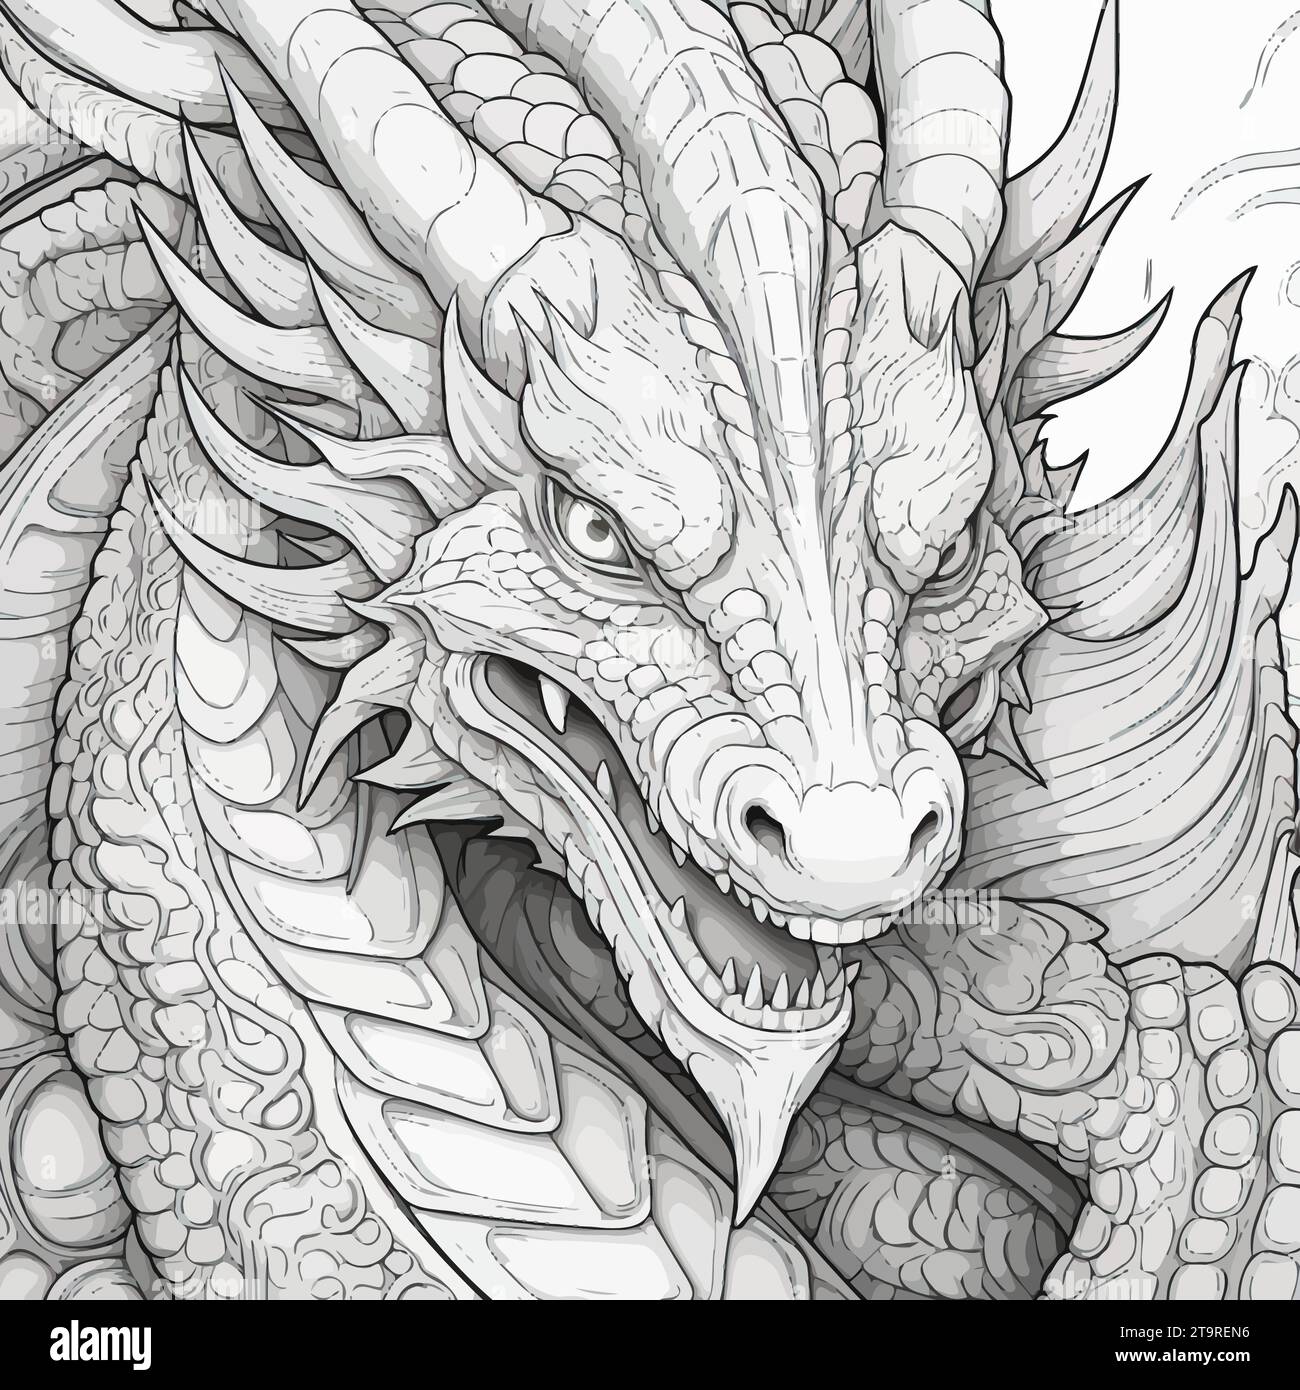 Dragon Coloring Illustration Vector Stock Vector